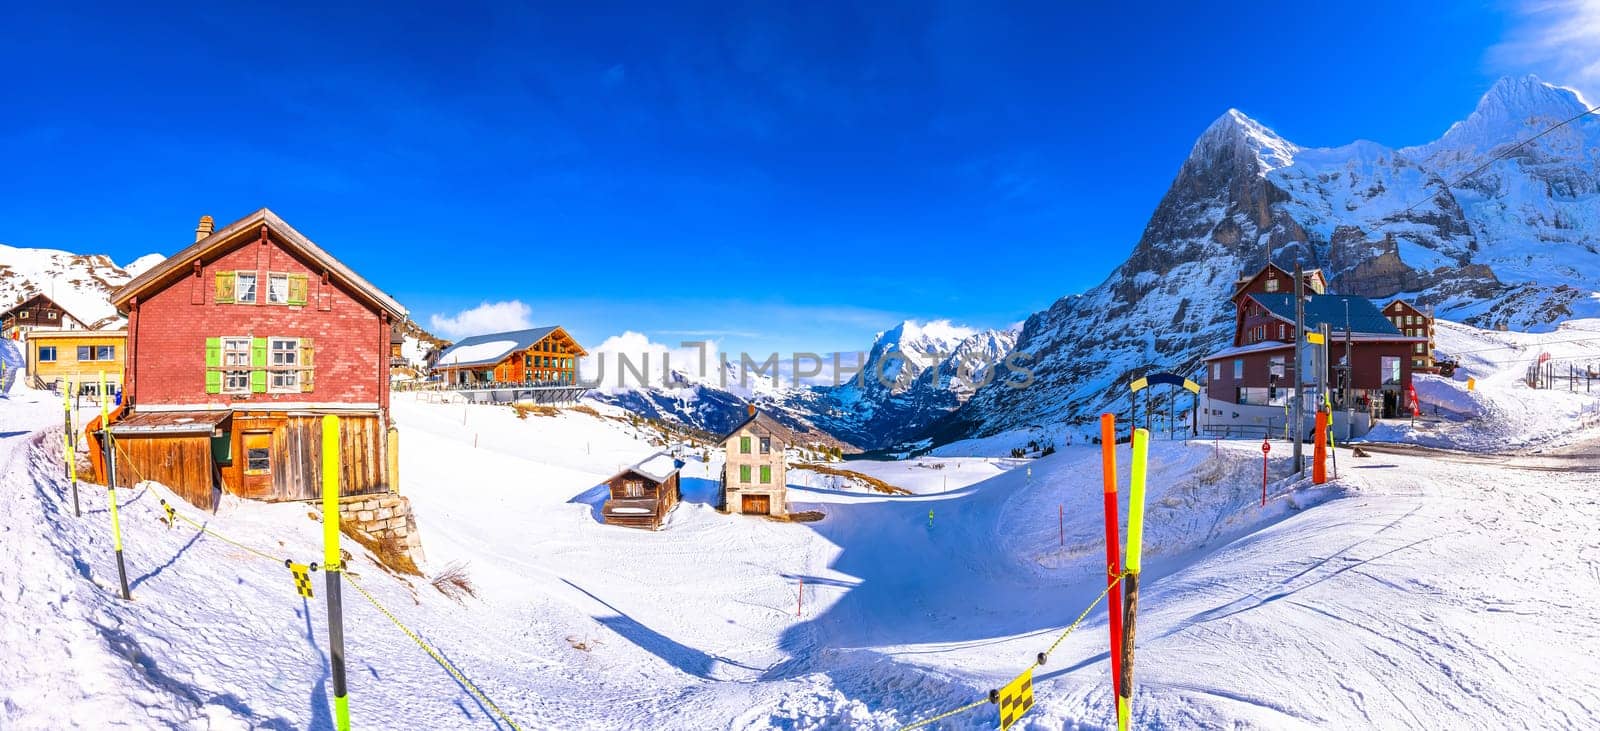 Kleine Scheidegg ski area and Eiger alpine peak panoramic view by xbrchx